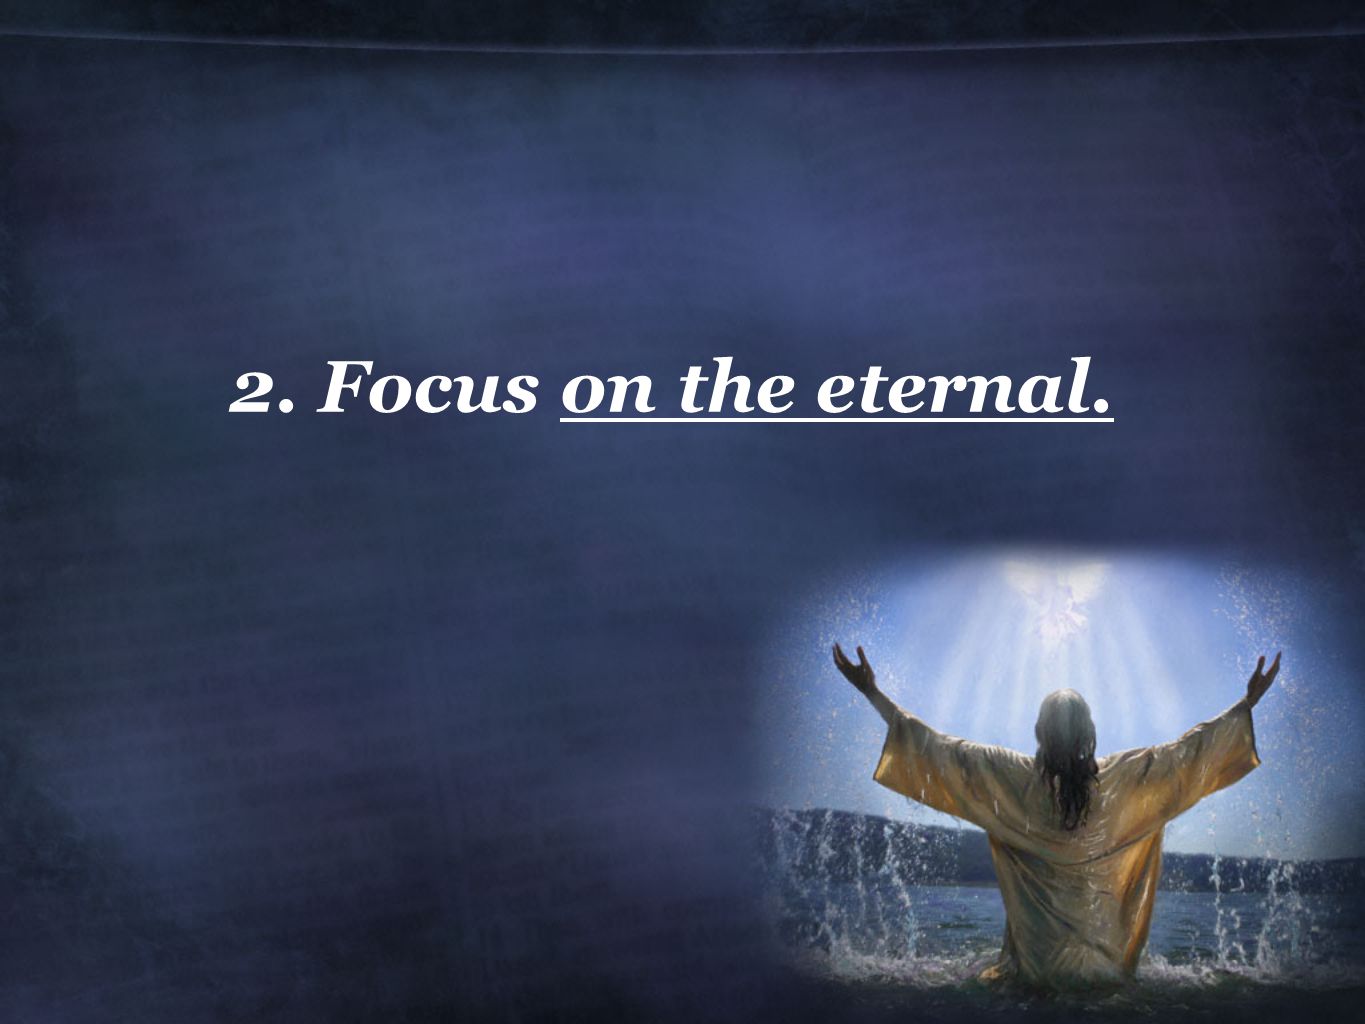 2. Focus on the eternal.